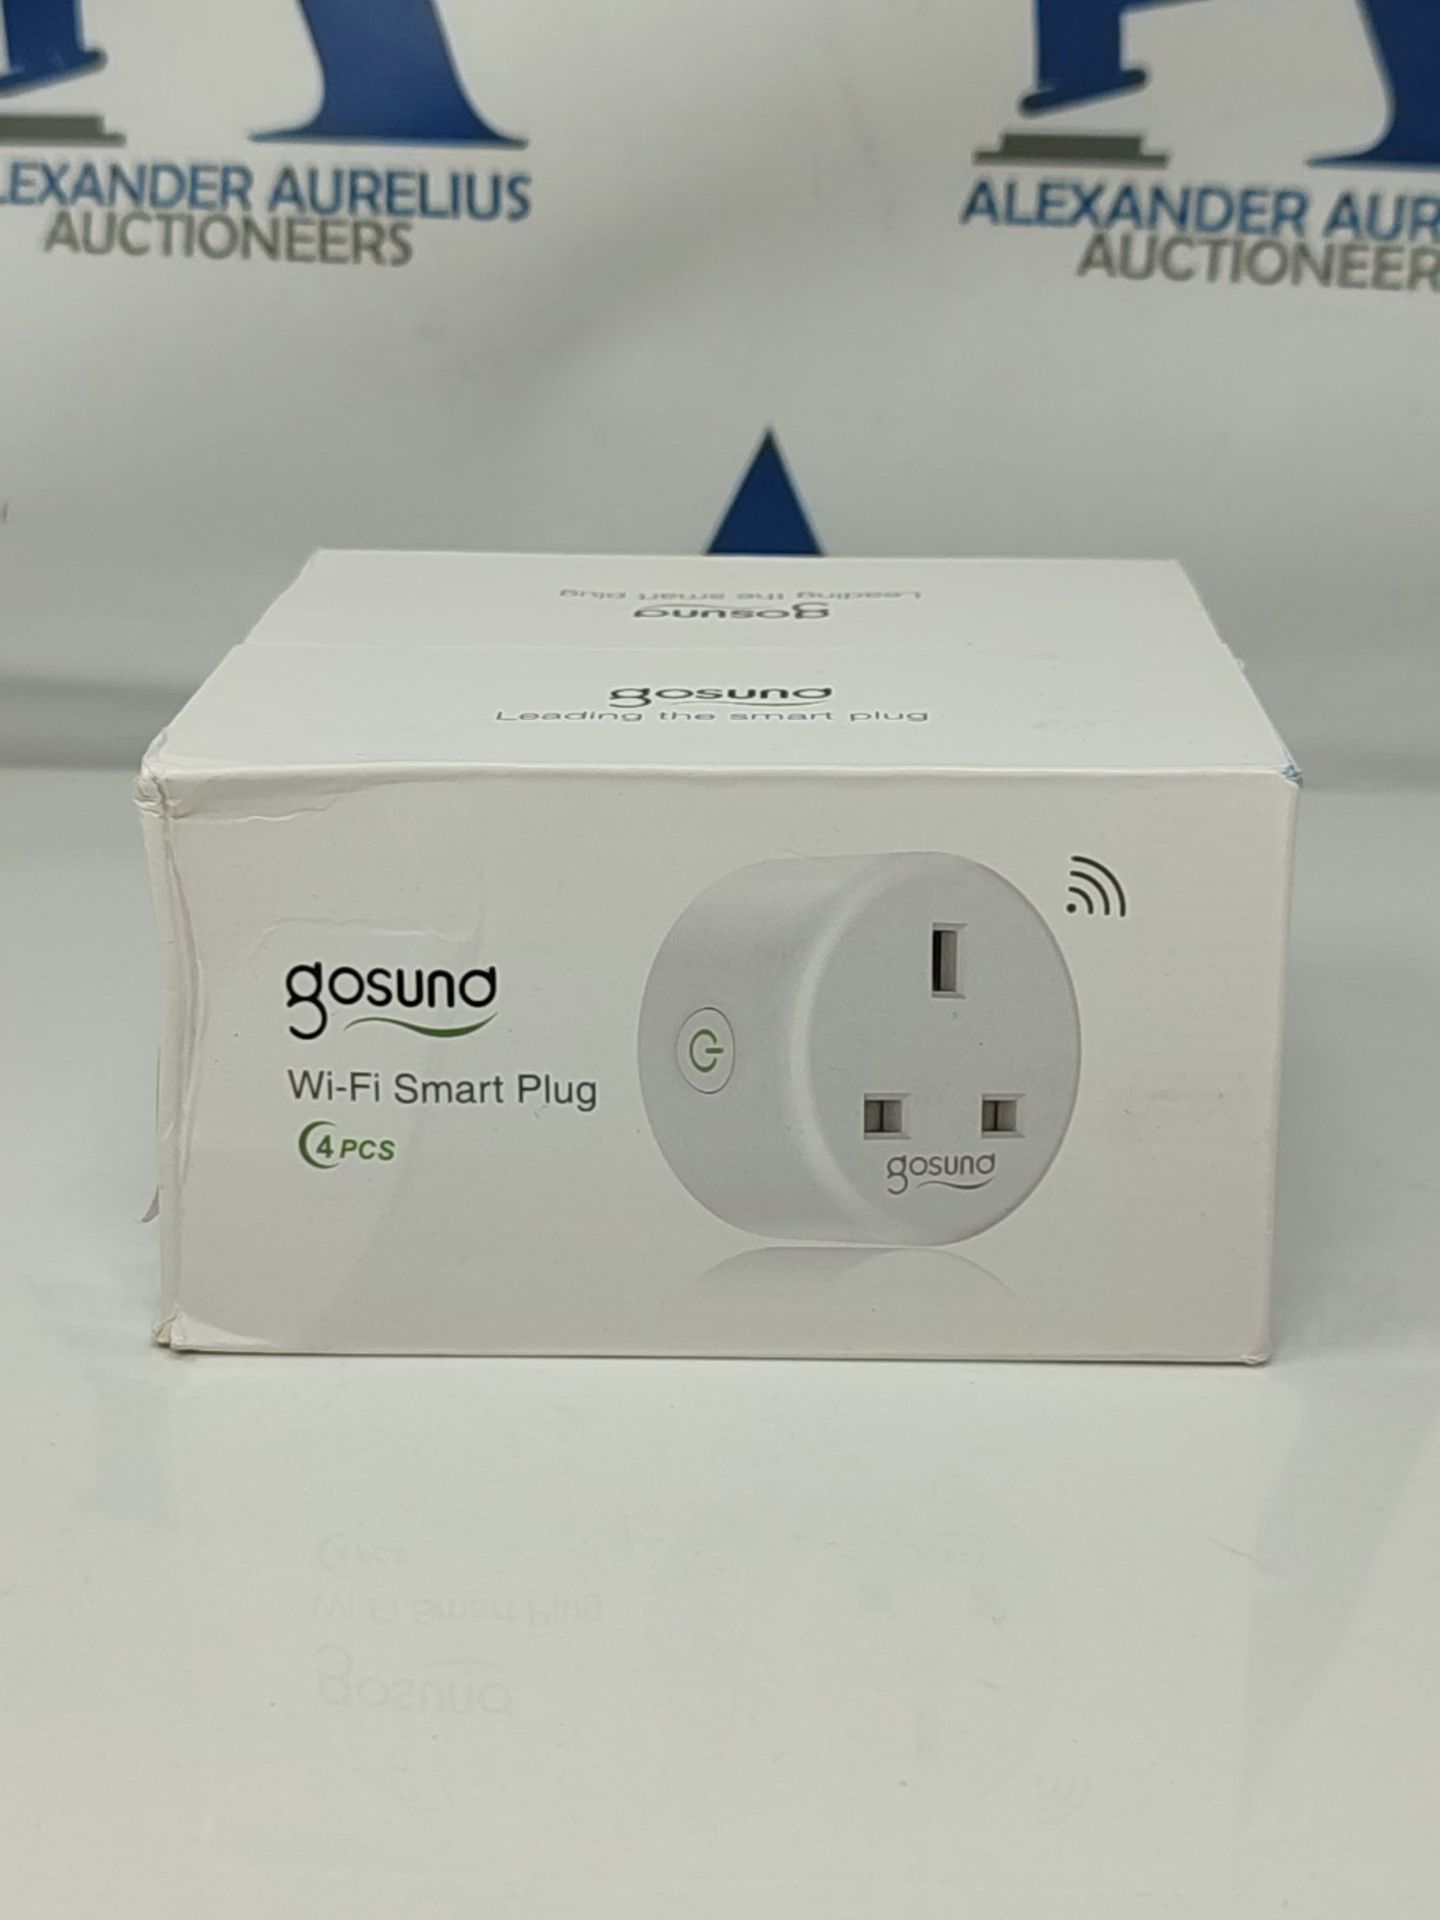 OHMAX Smart Plug, Energy Monitoring Smart Wifi Plug Compatible with Alexa, Google Home - Image 2 of 3